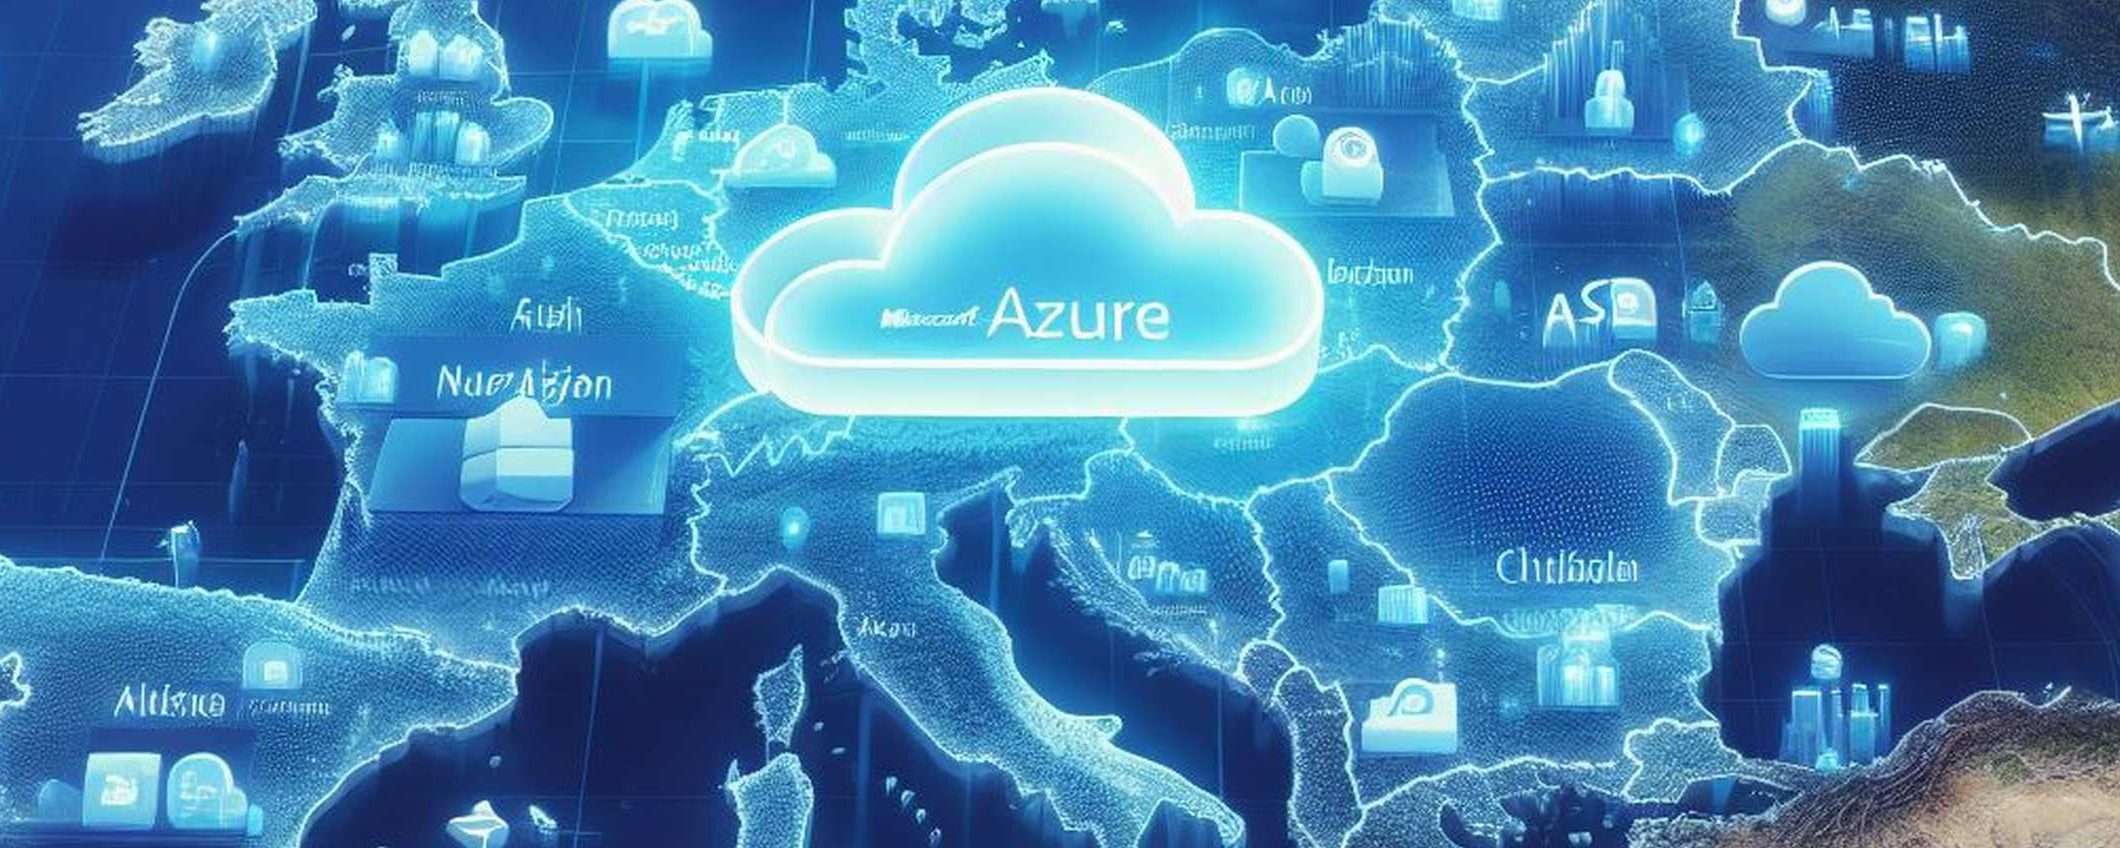 Microsoft Cloud: tutti i dati rimangono in Europa